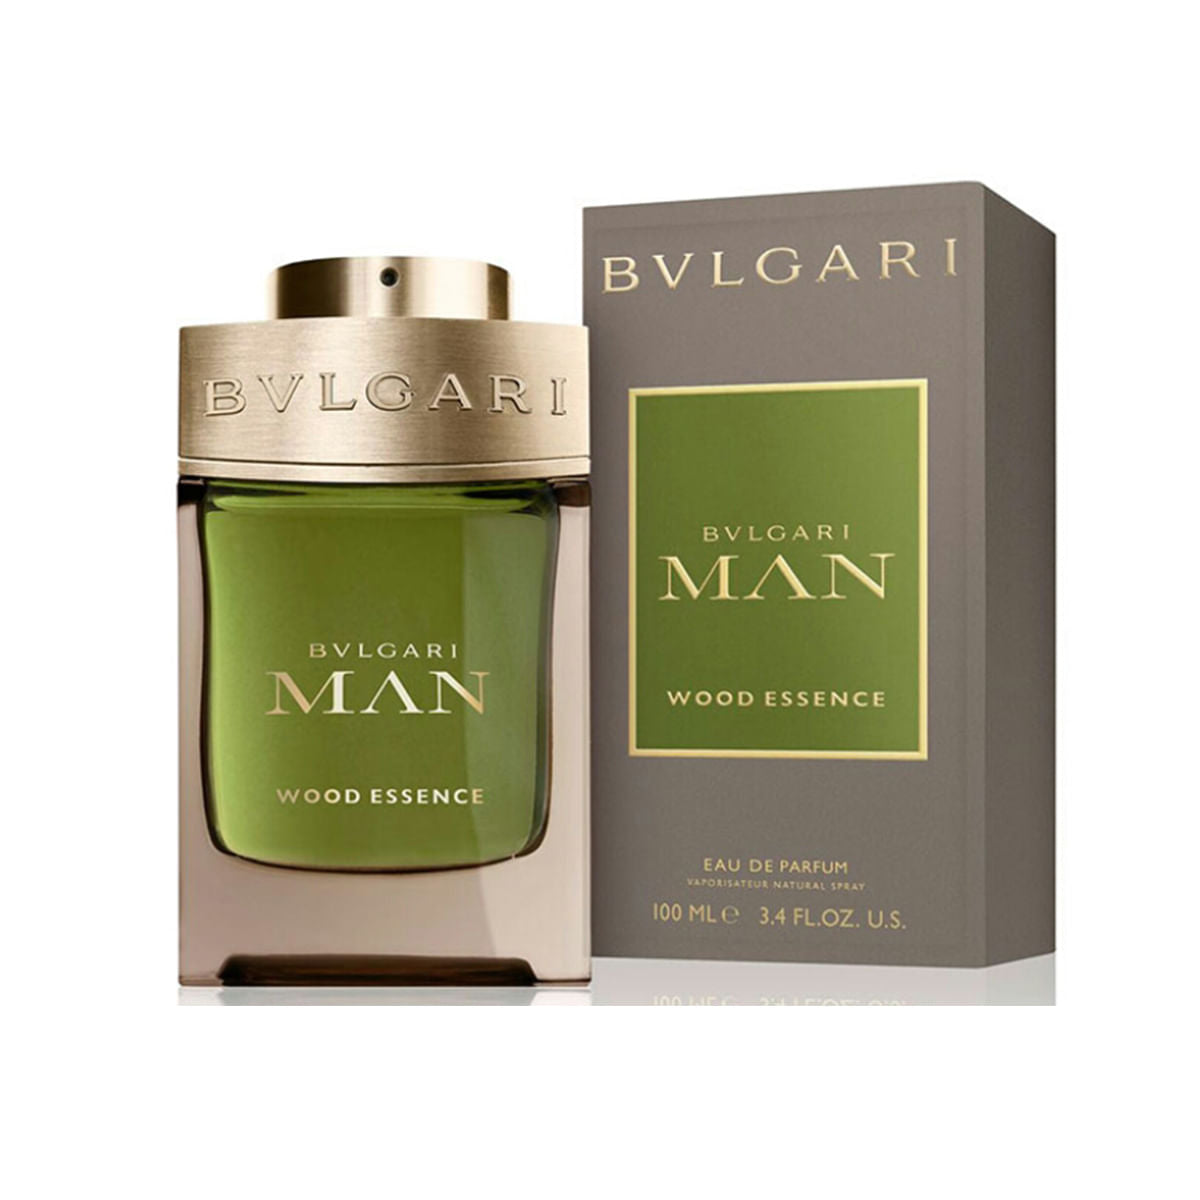 Bvlgari Man Wood Essence Neroli Eau de Parfum